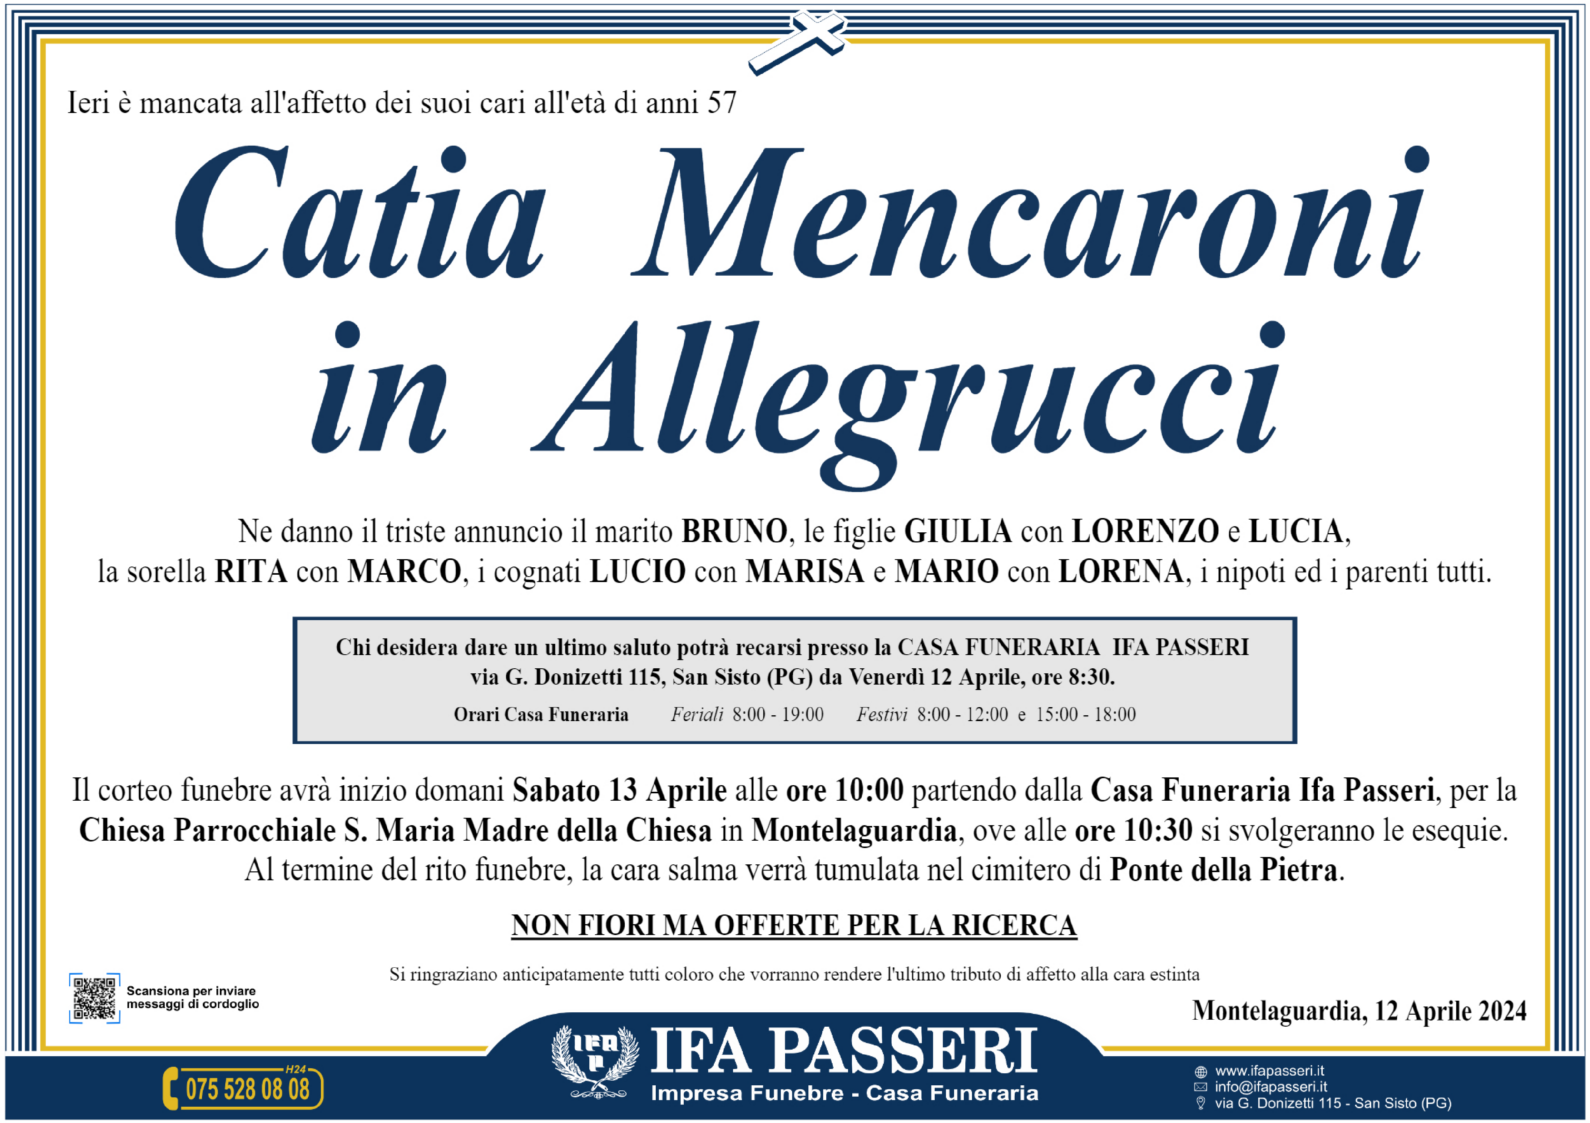 Catia Mencaroni in Allegrucci